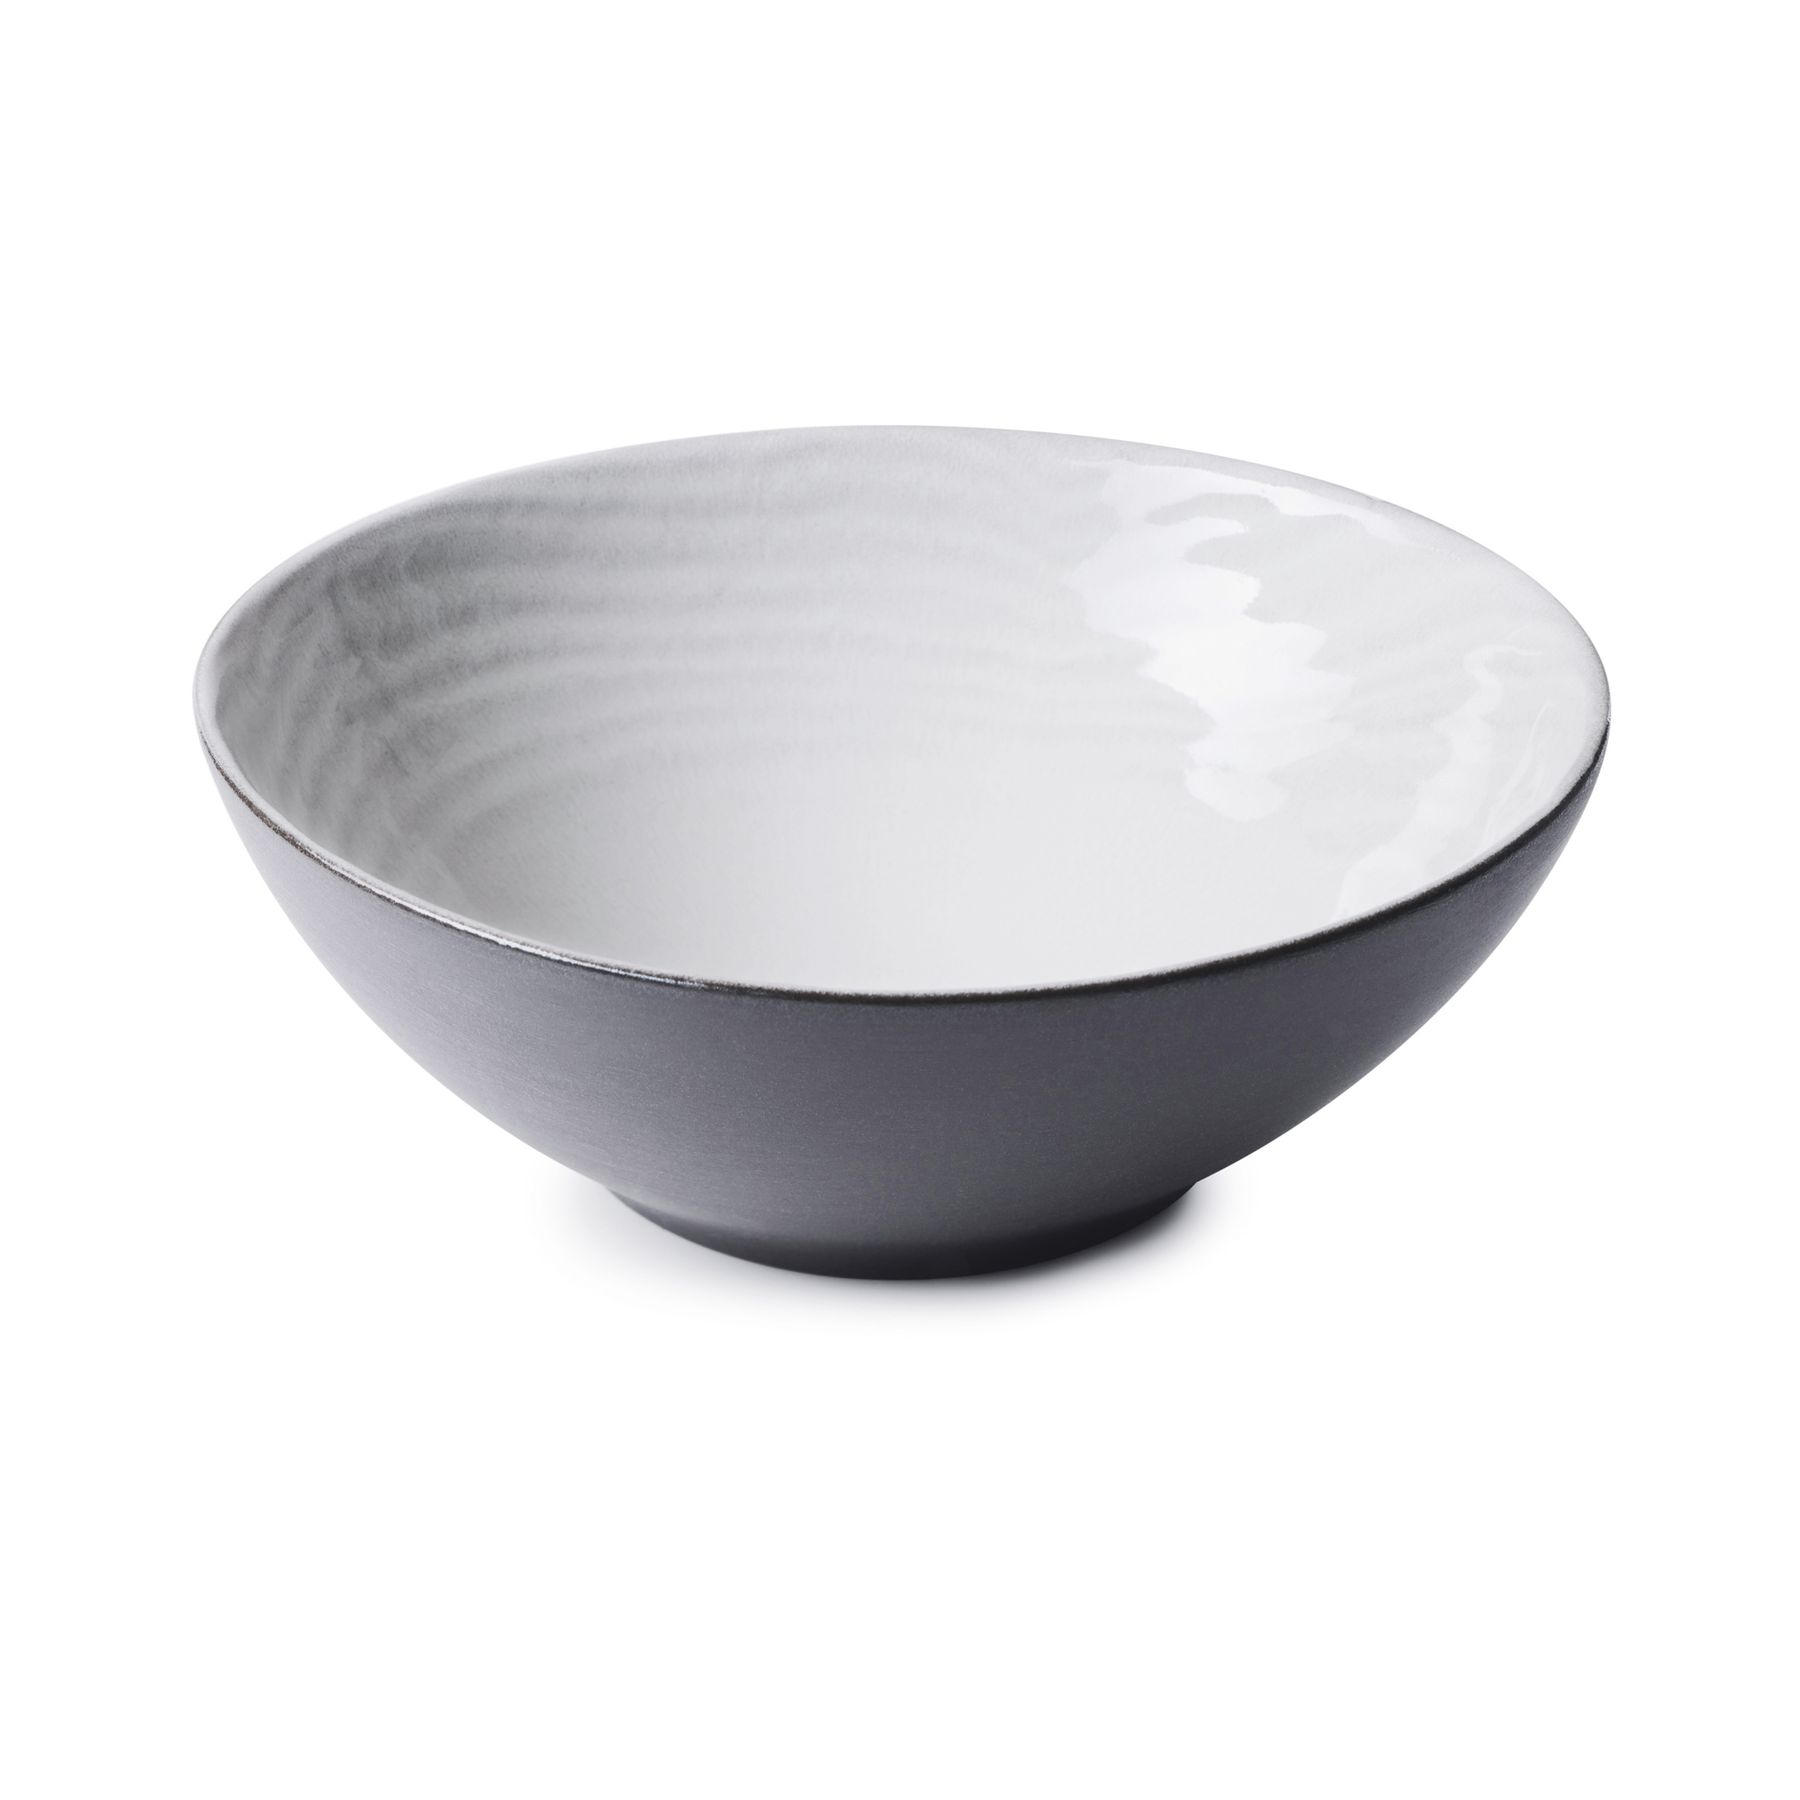 Тарелка глубокая. Салатник «Свелл»; керамика. Revol салатник 19 см. Тарелка суповая.